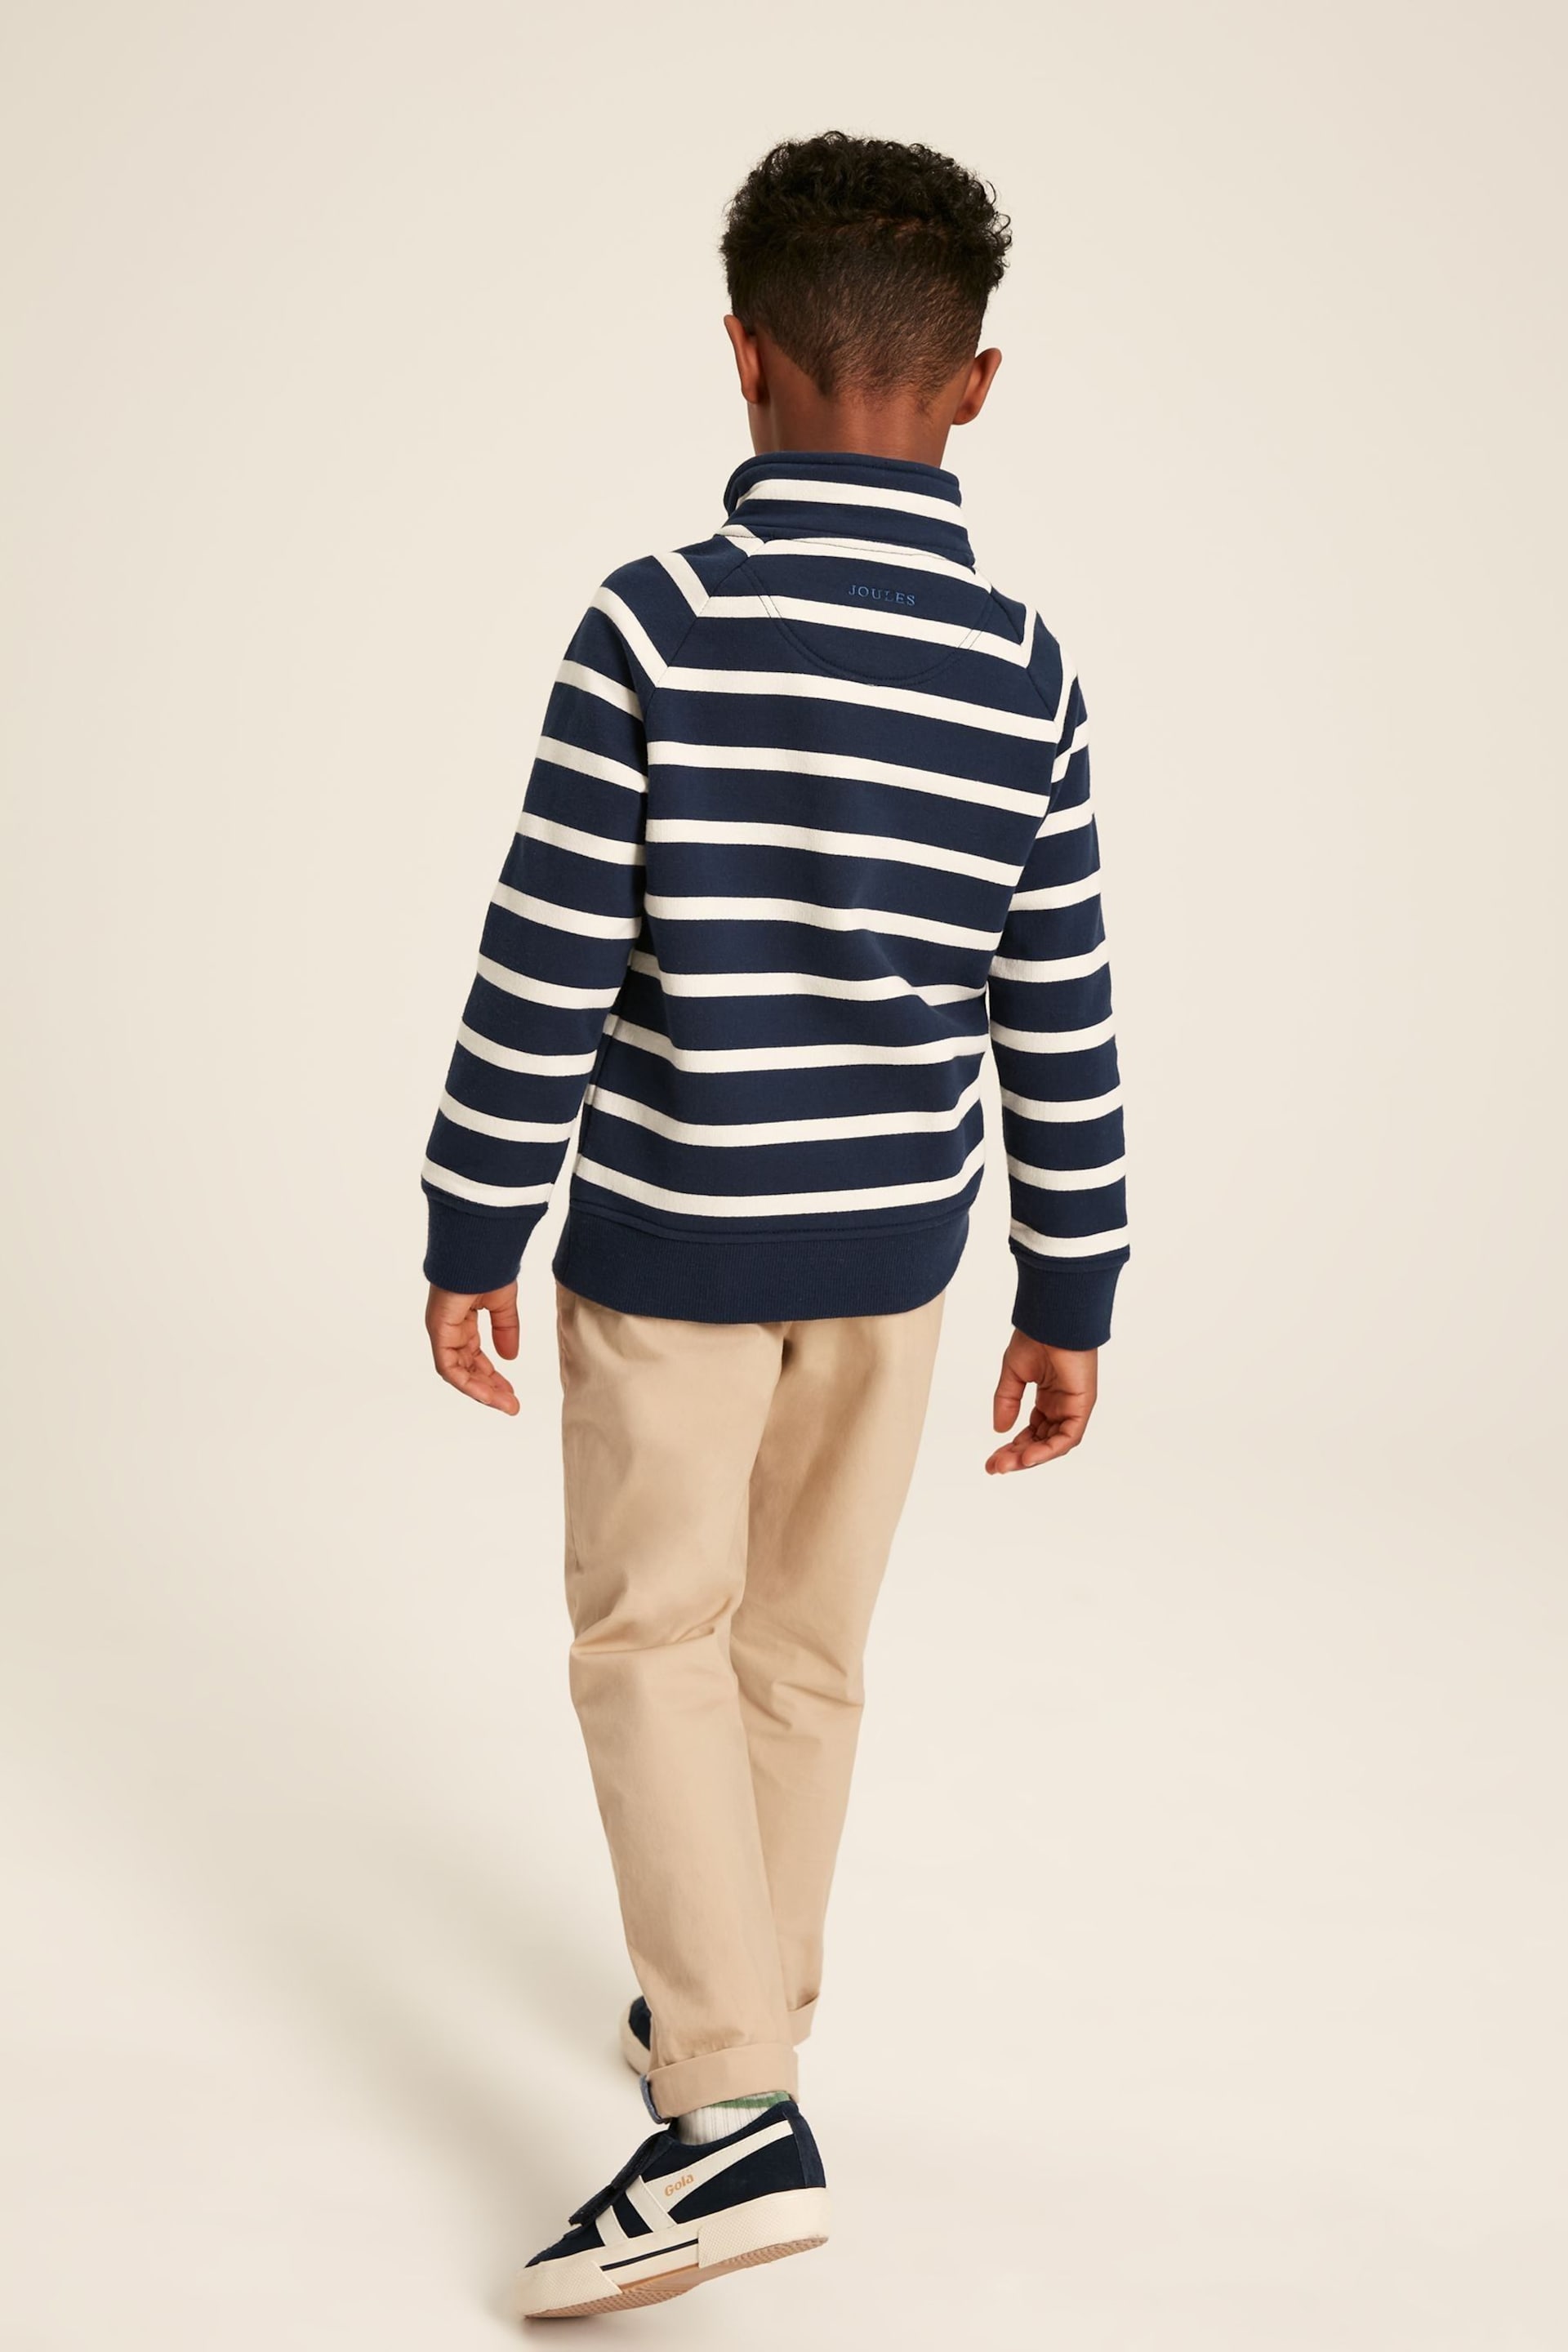 Joules Finn Navy & White Striped Quarter Zip Sweatshirt - Image 3 of 11